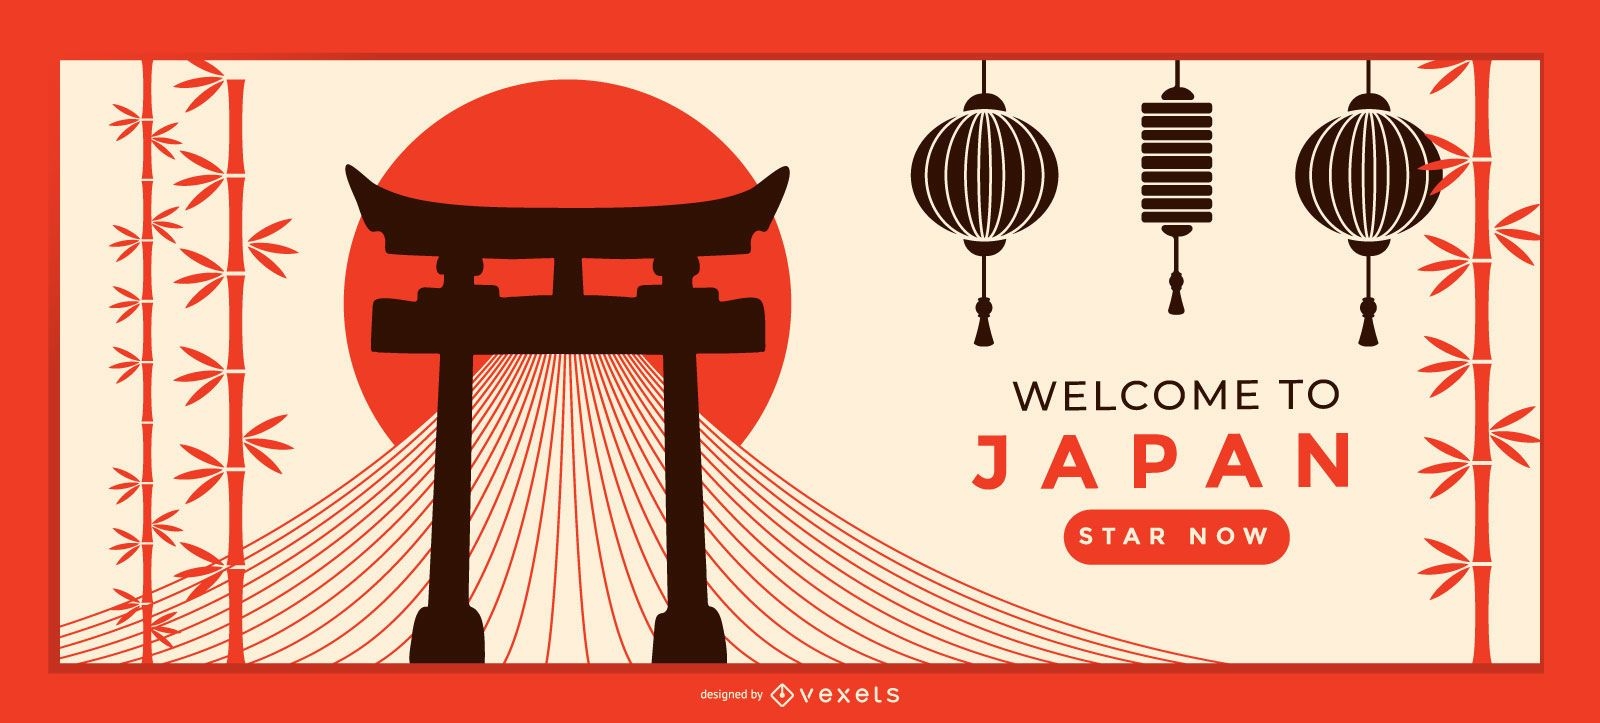 Modelo de p?gina de destino de boas-vindas ao Jap?o